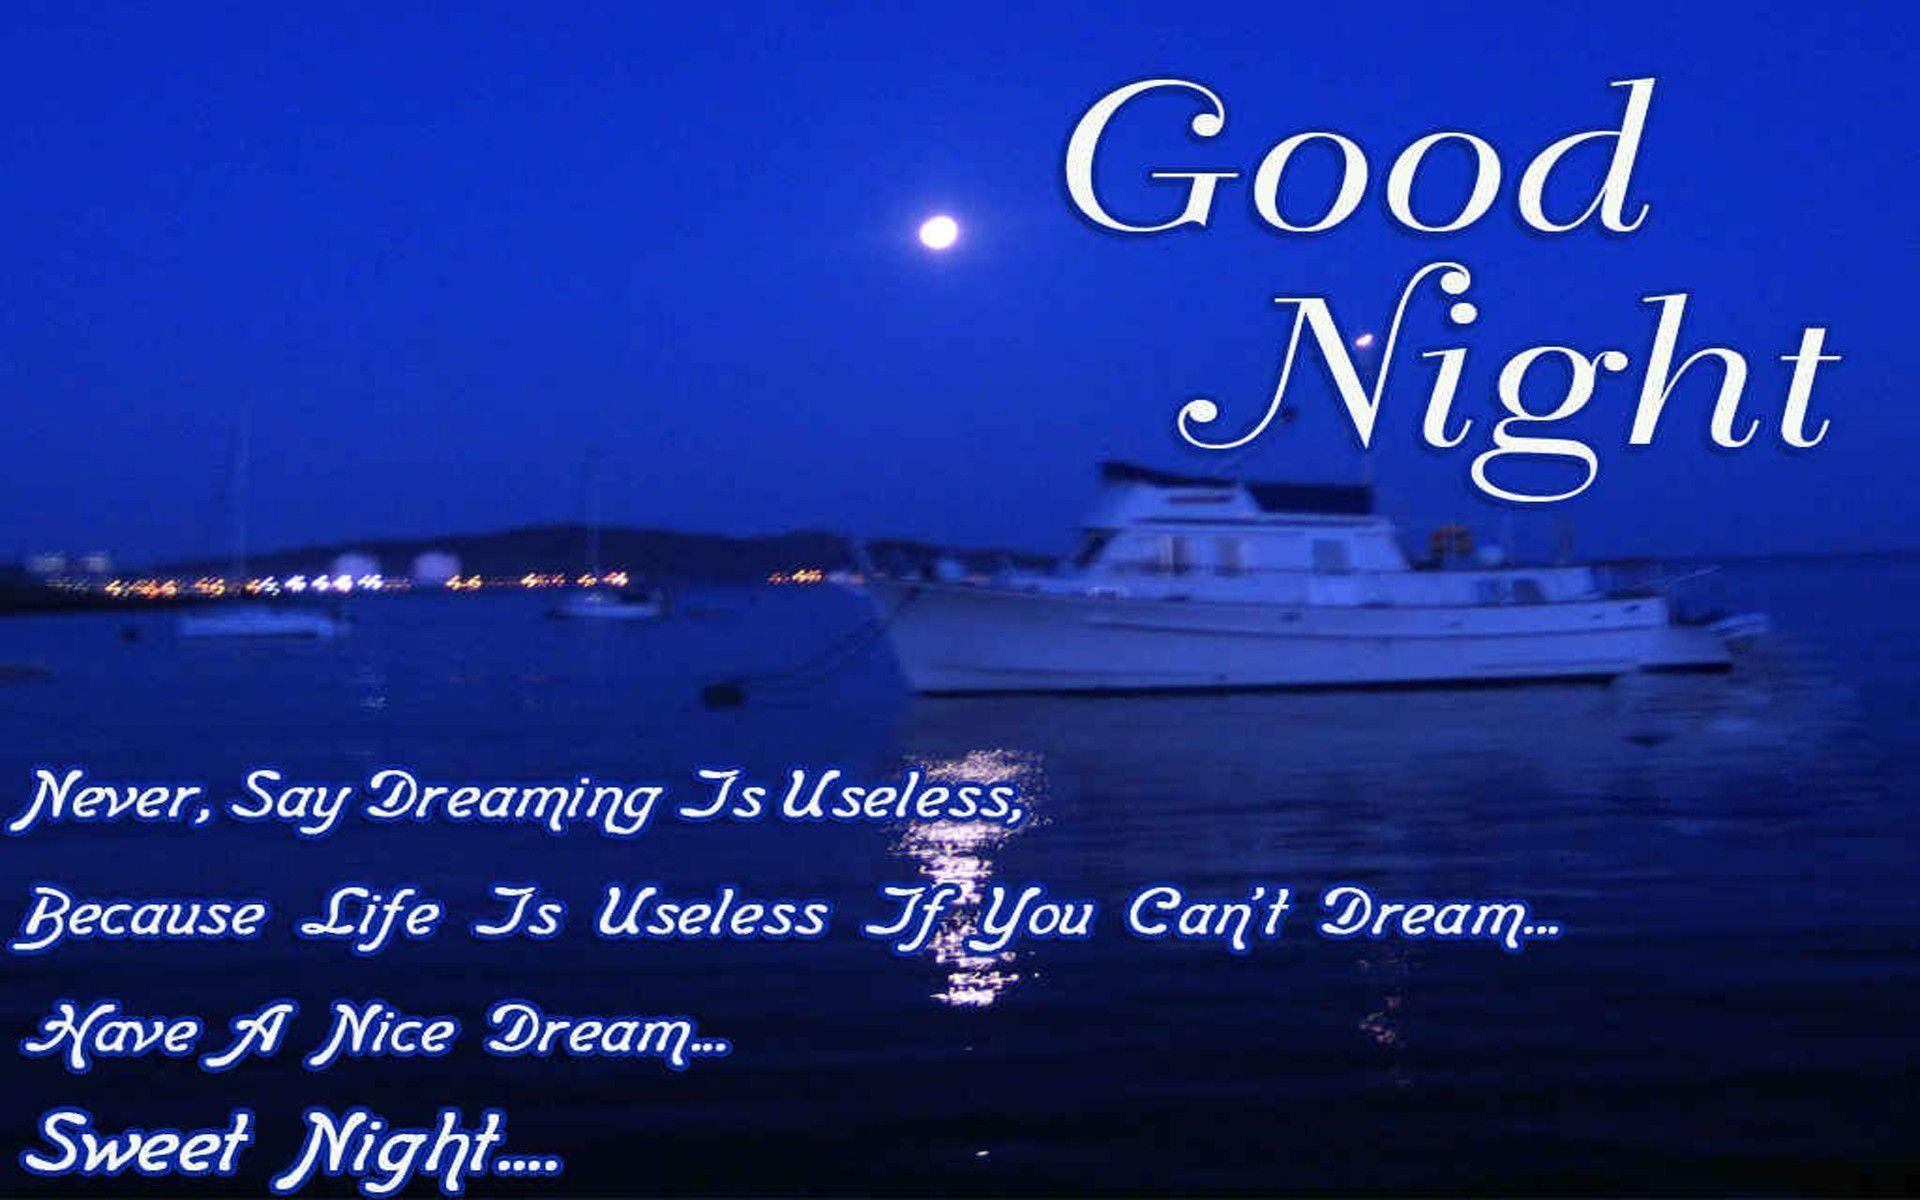 Good Night HD Wallpaper Free Download. HD Free Wallpaper Download